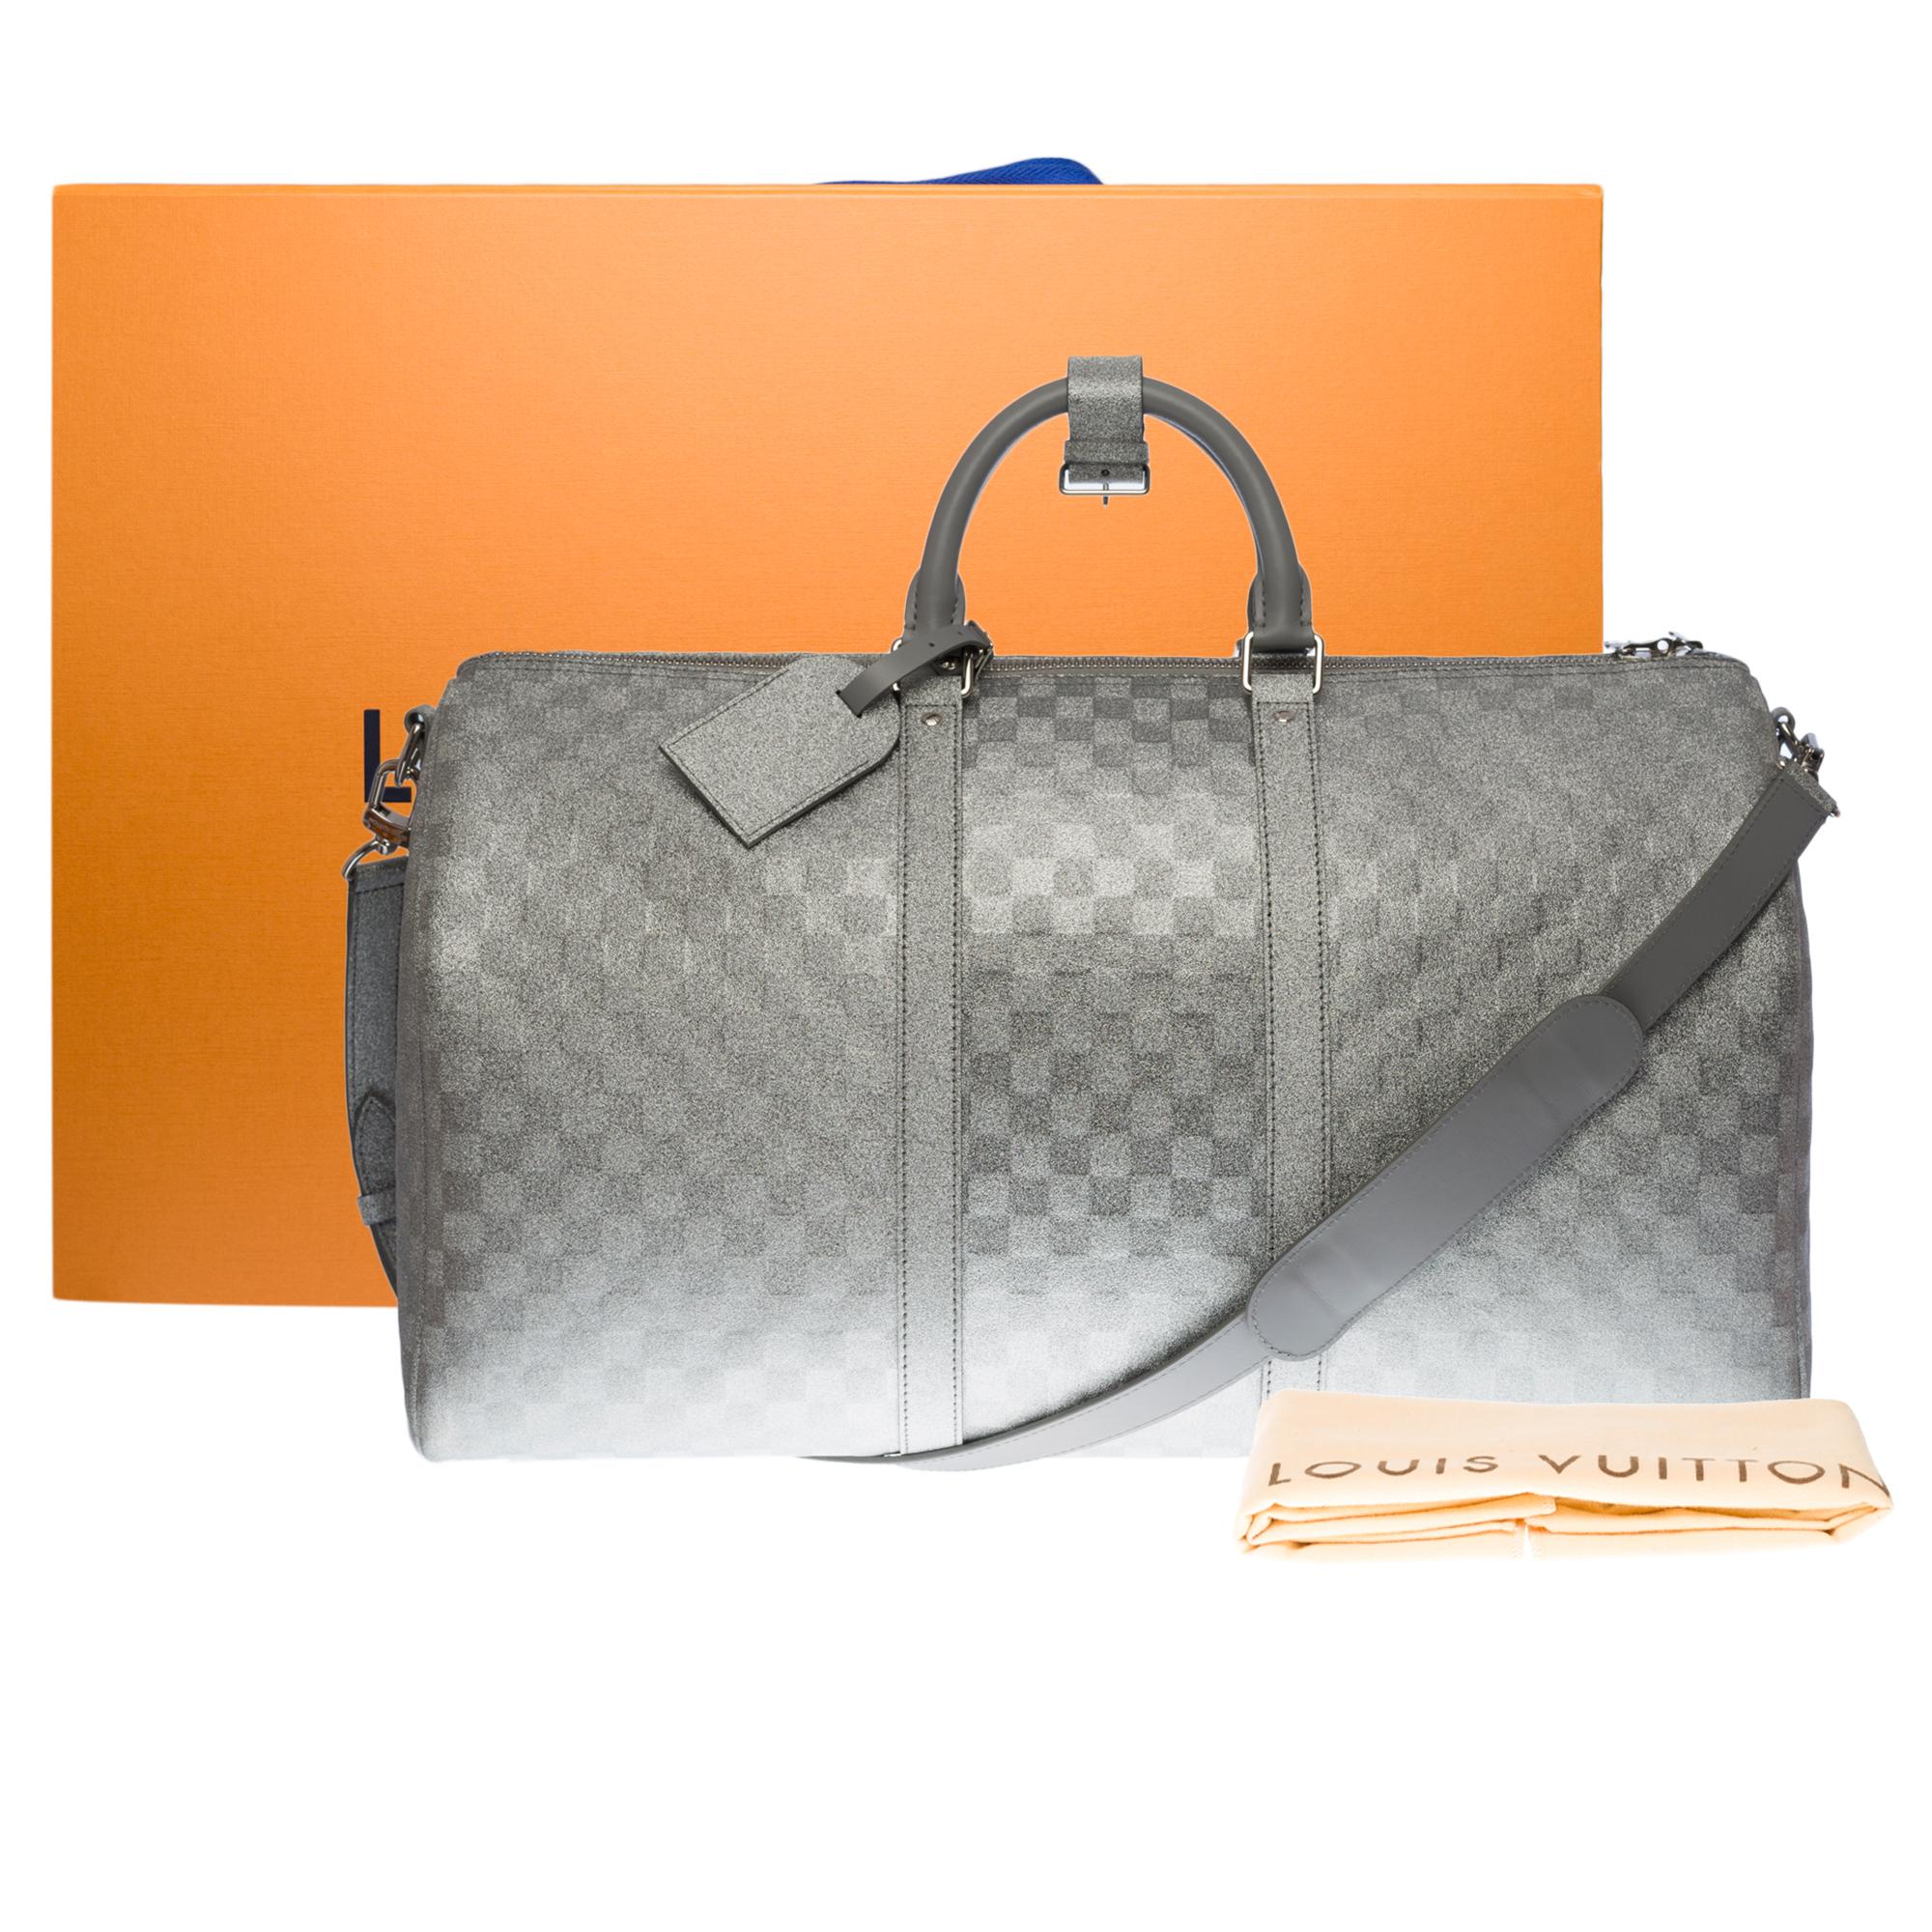 NEW-Louis Vuitton keepall 50 strap Travel bag Glitter silver by virgil Abloh 2